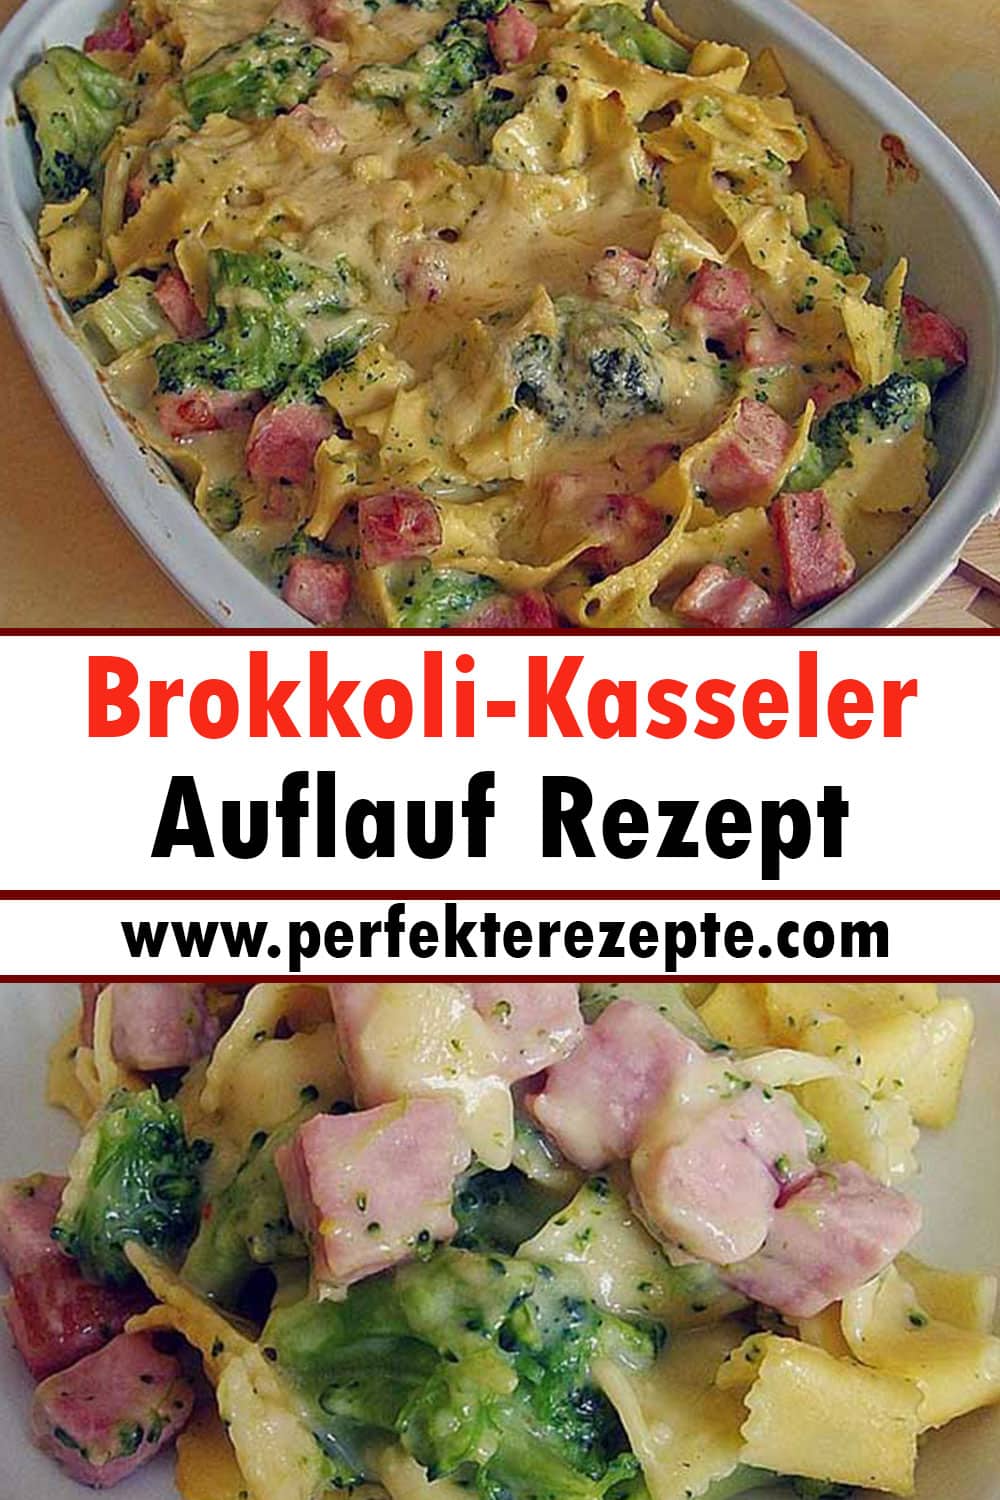 Brokkoli-Kasseler-Auflauf Rezept